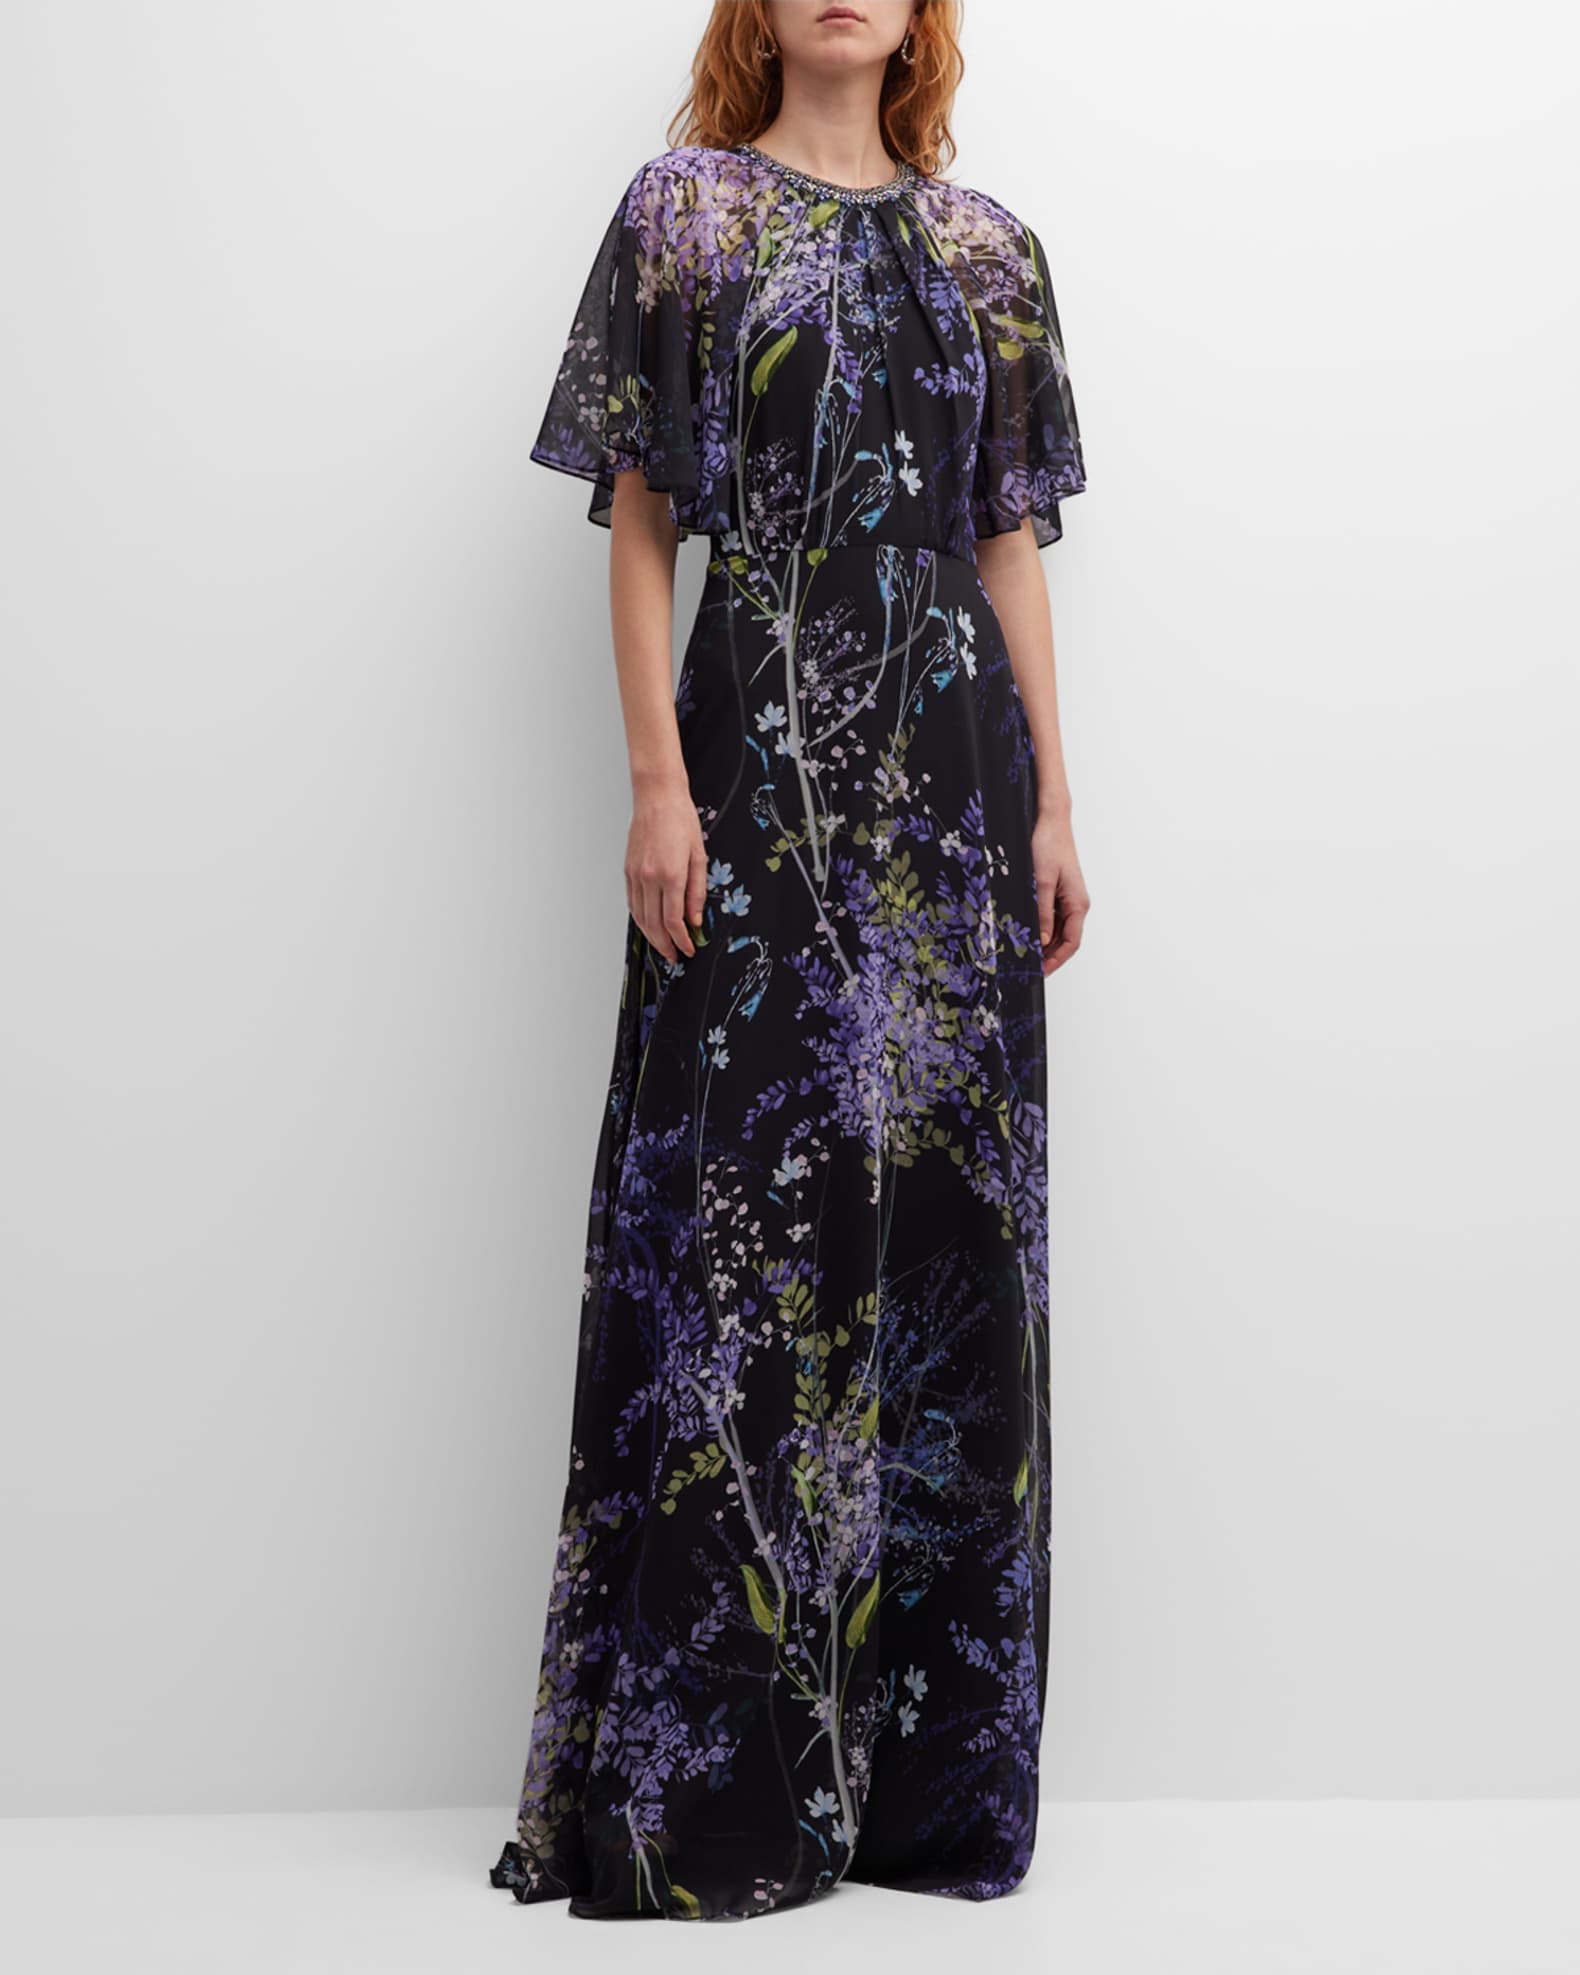 Rickie Freeman for Teri Jon Pleated Floral-Print Capelet Chiffon Gown ...